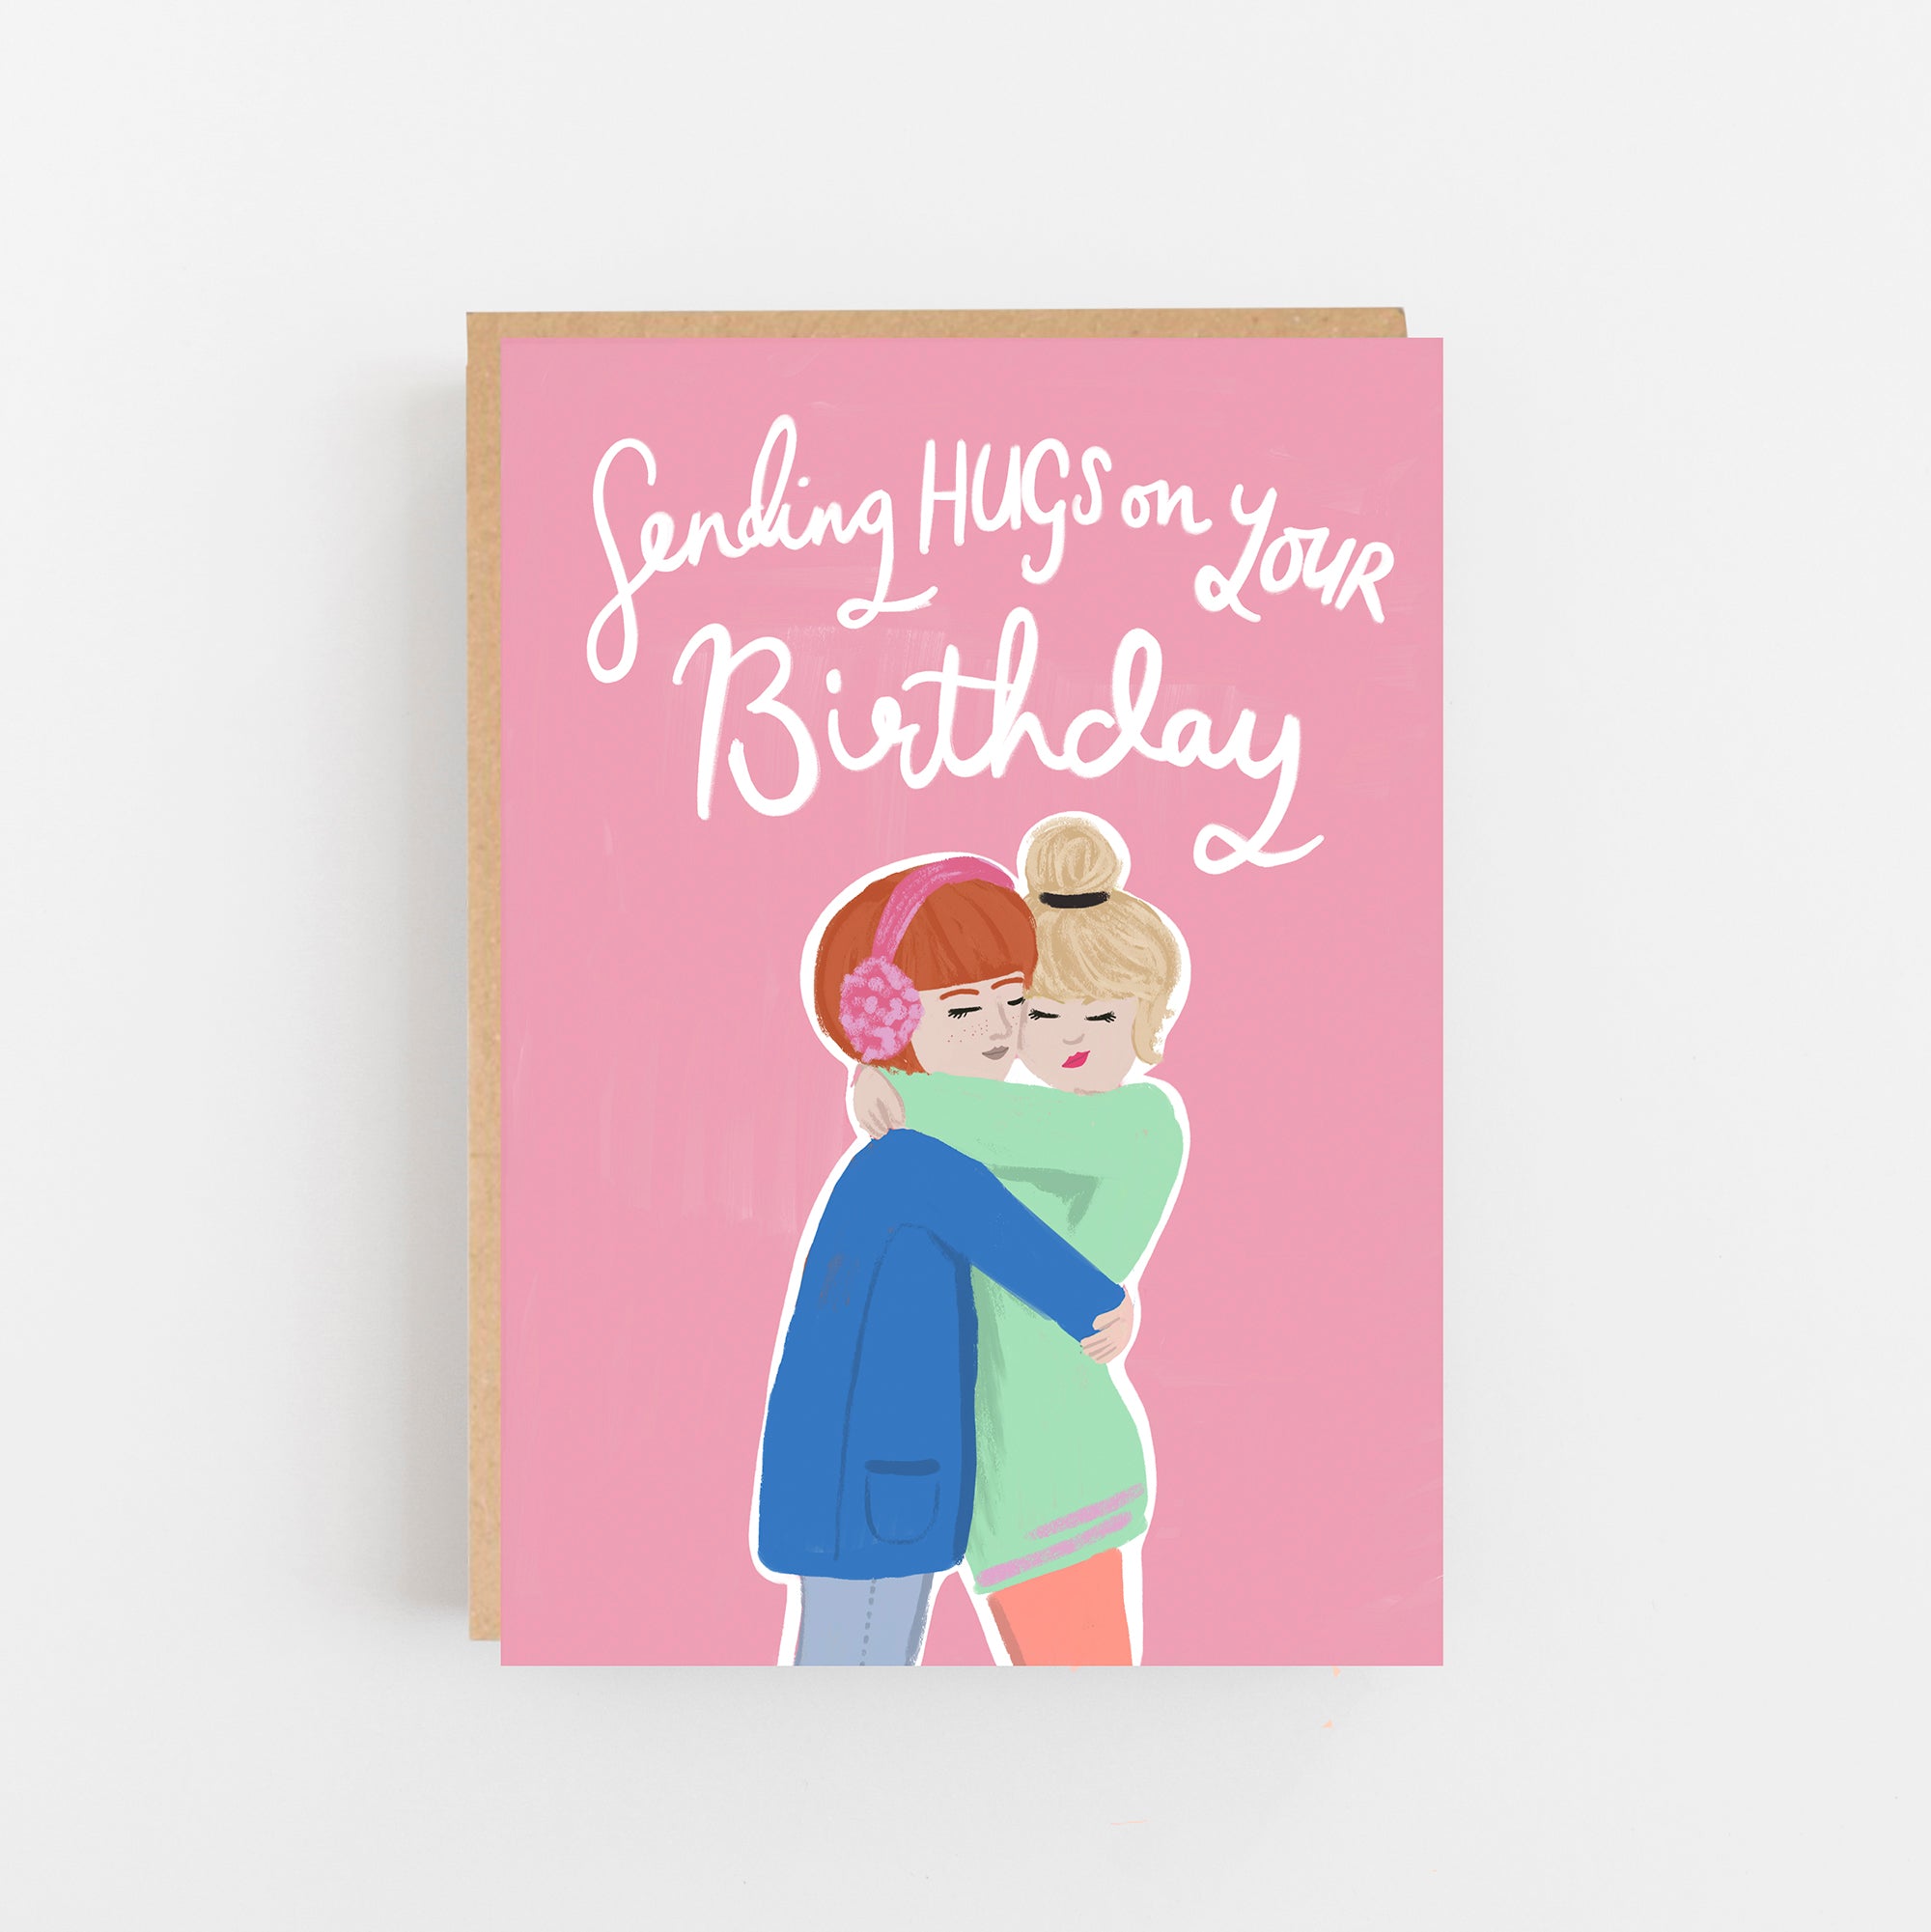 Sending Hugs on Your Birthday